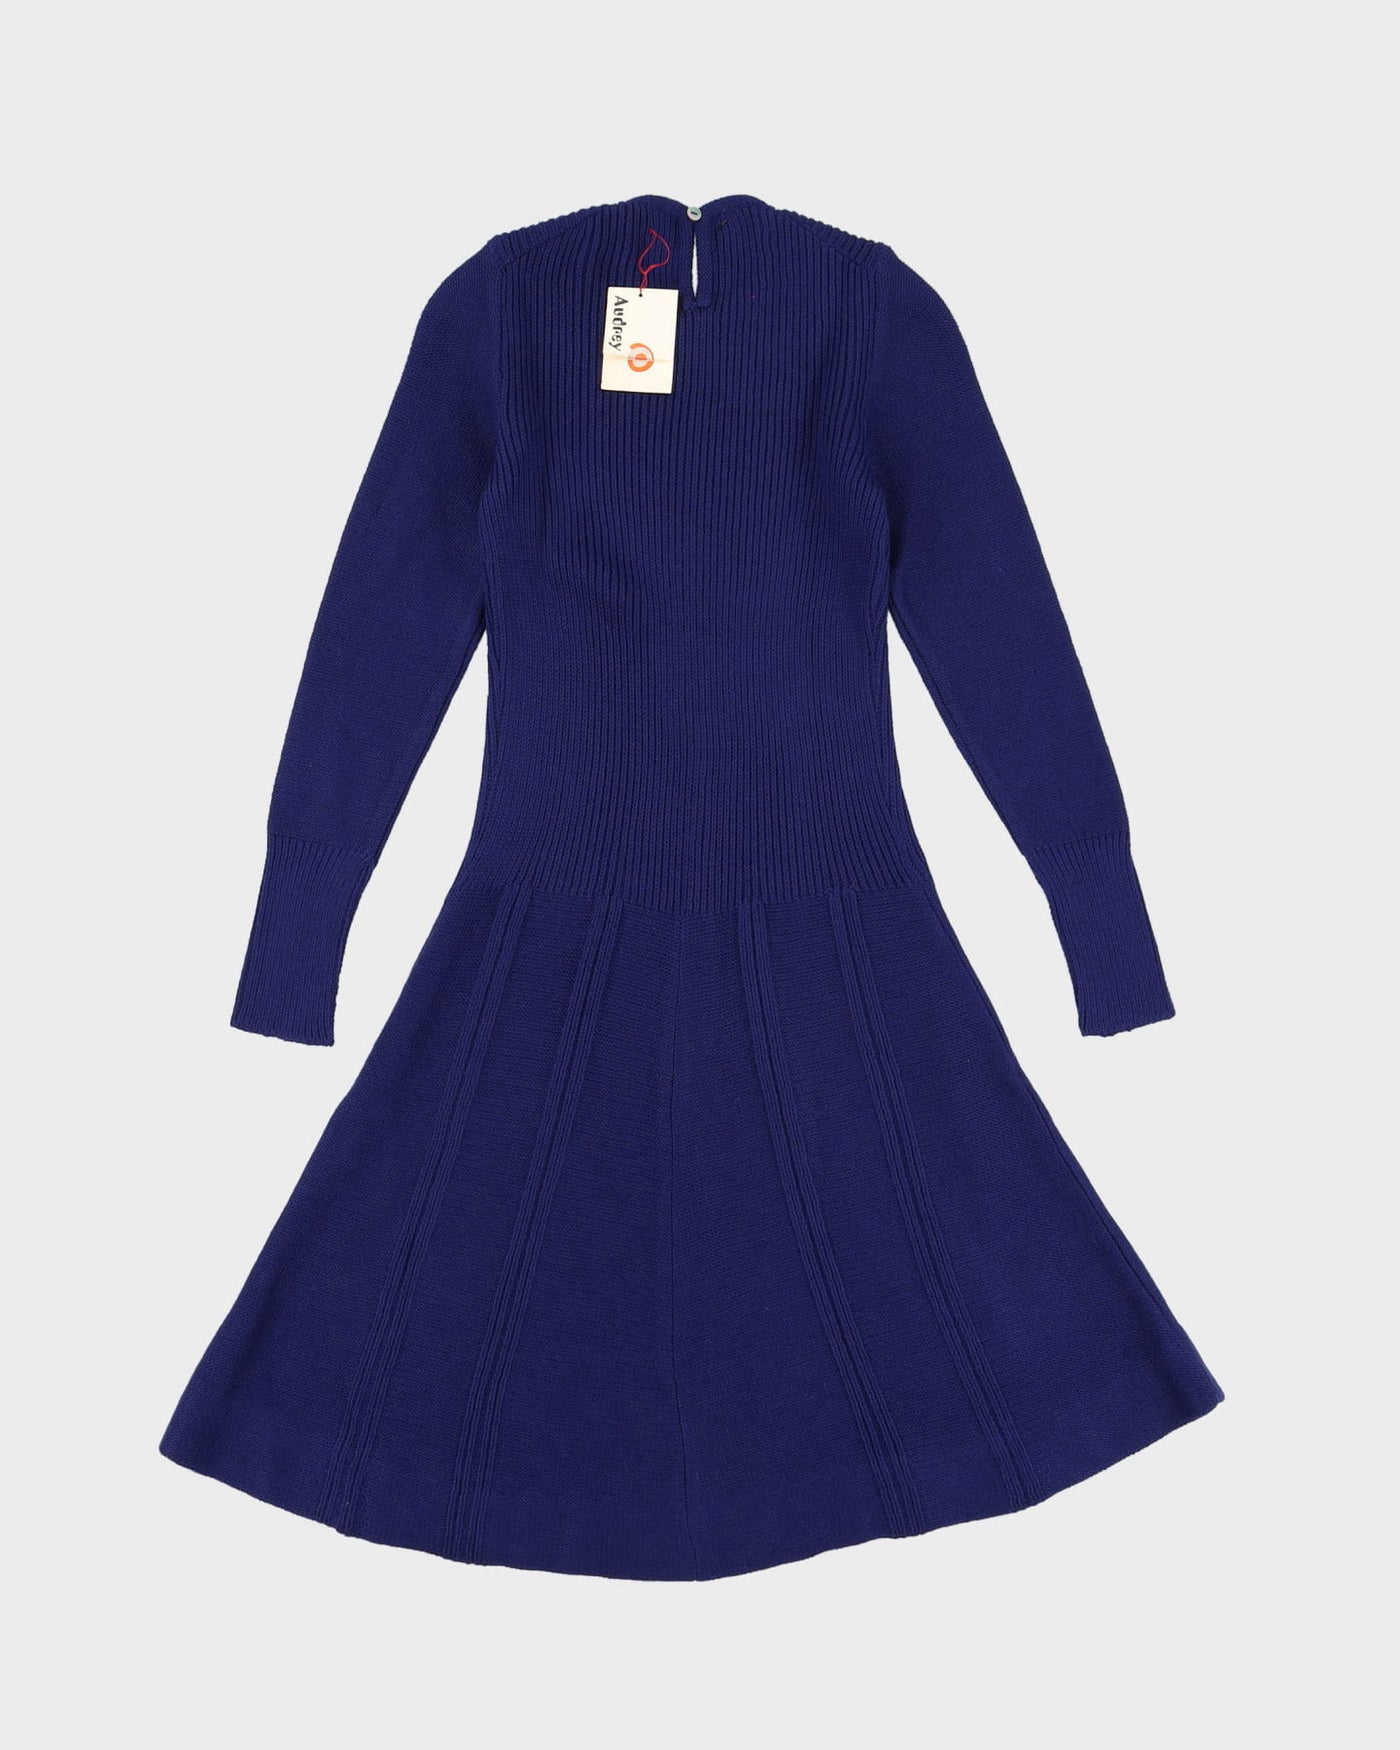 1970s Audrey Blue Knitted Midi Dress - XS